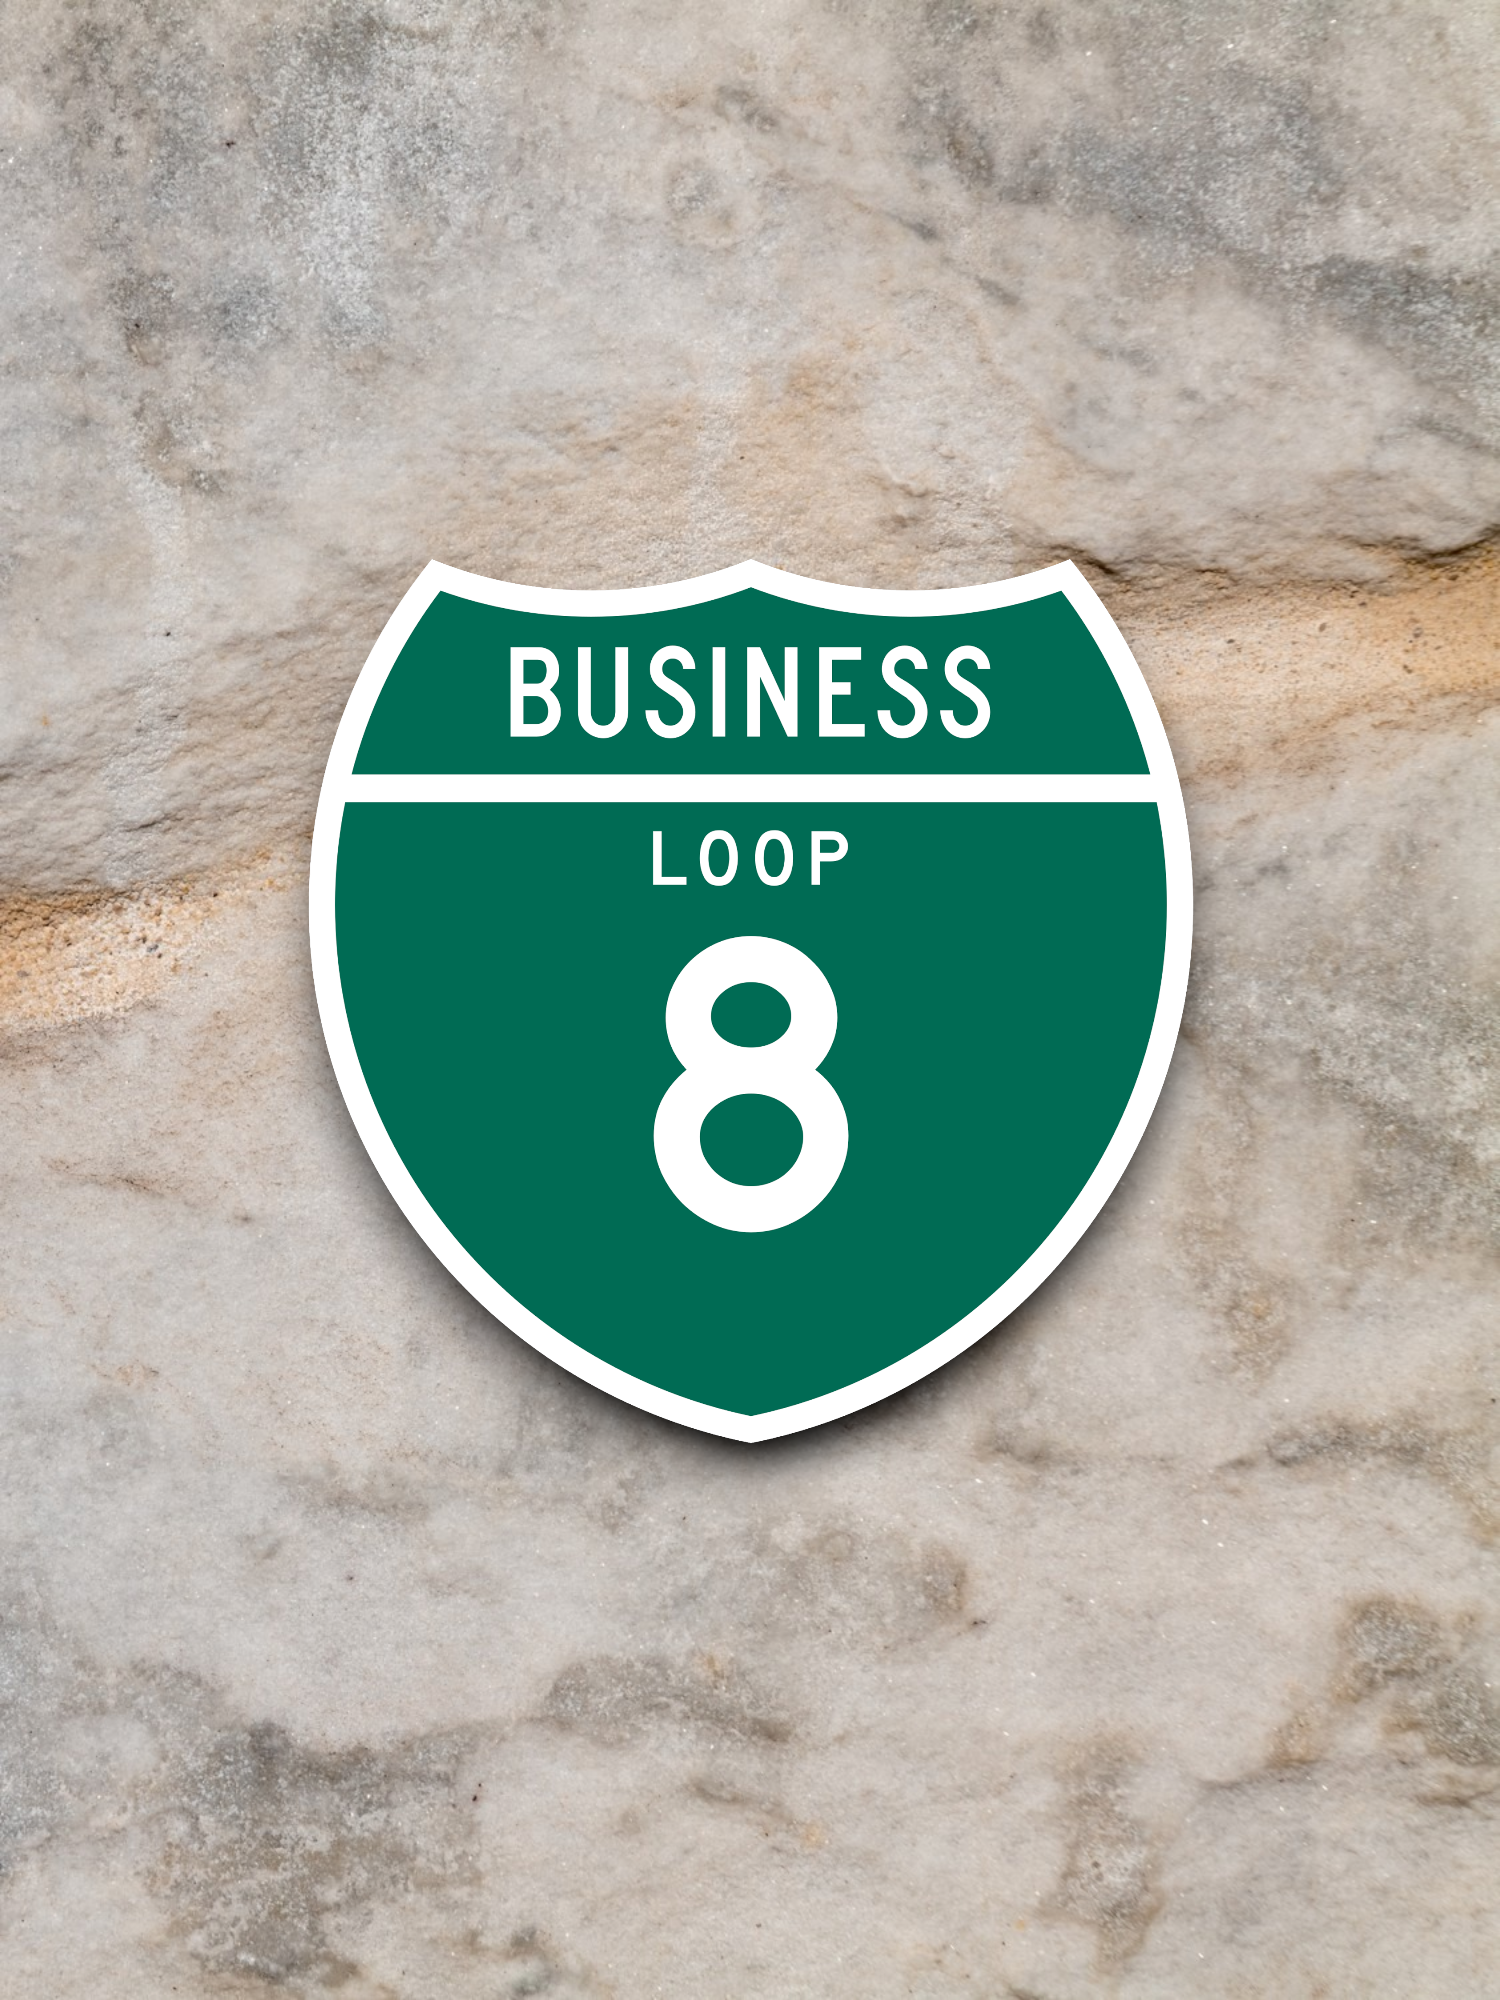 Business Loop Interstate 8 California Sticker